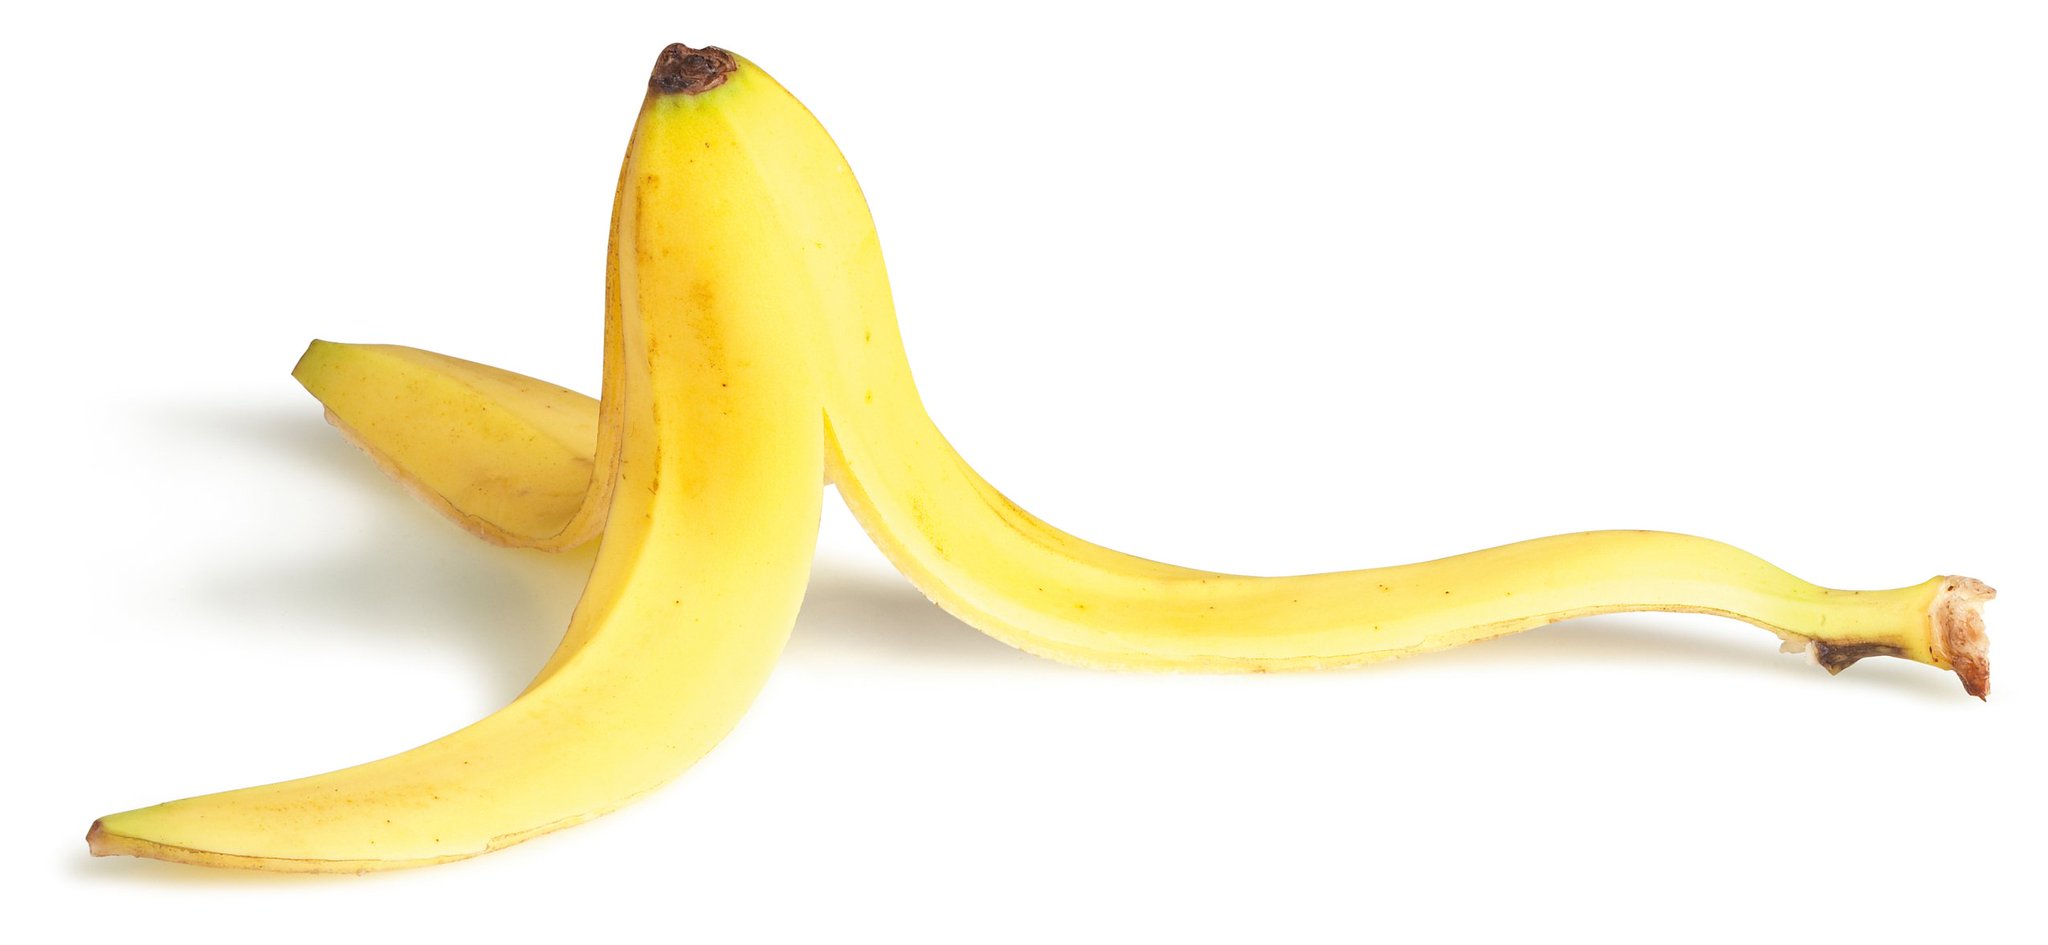 Banana peel photo